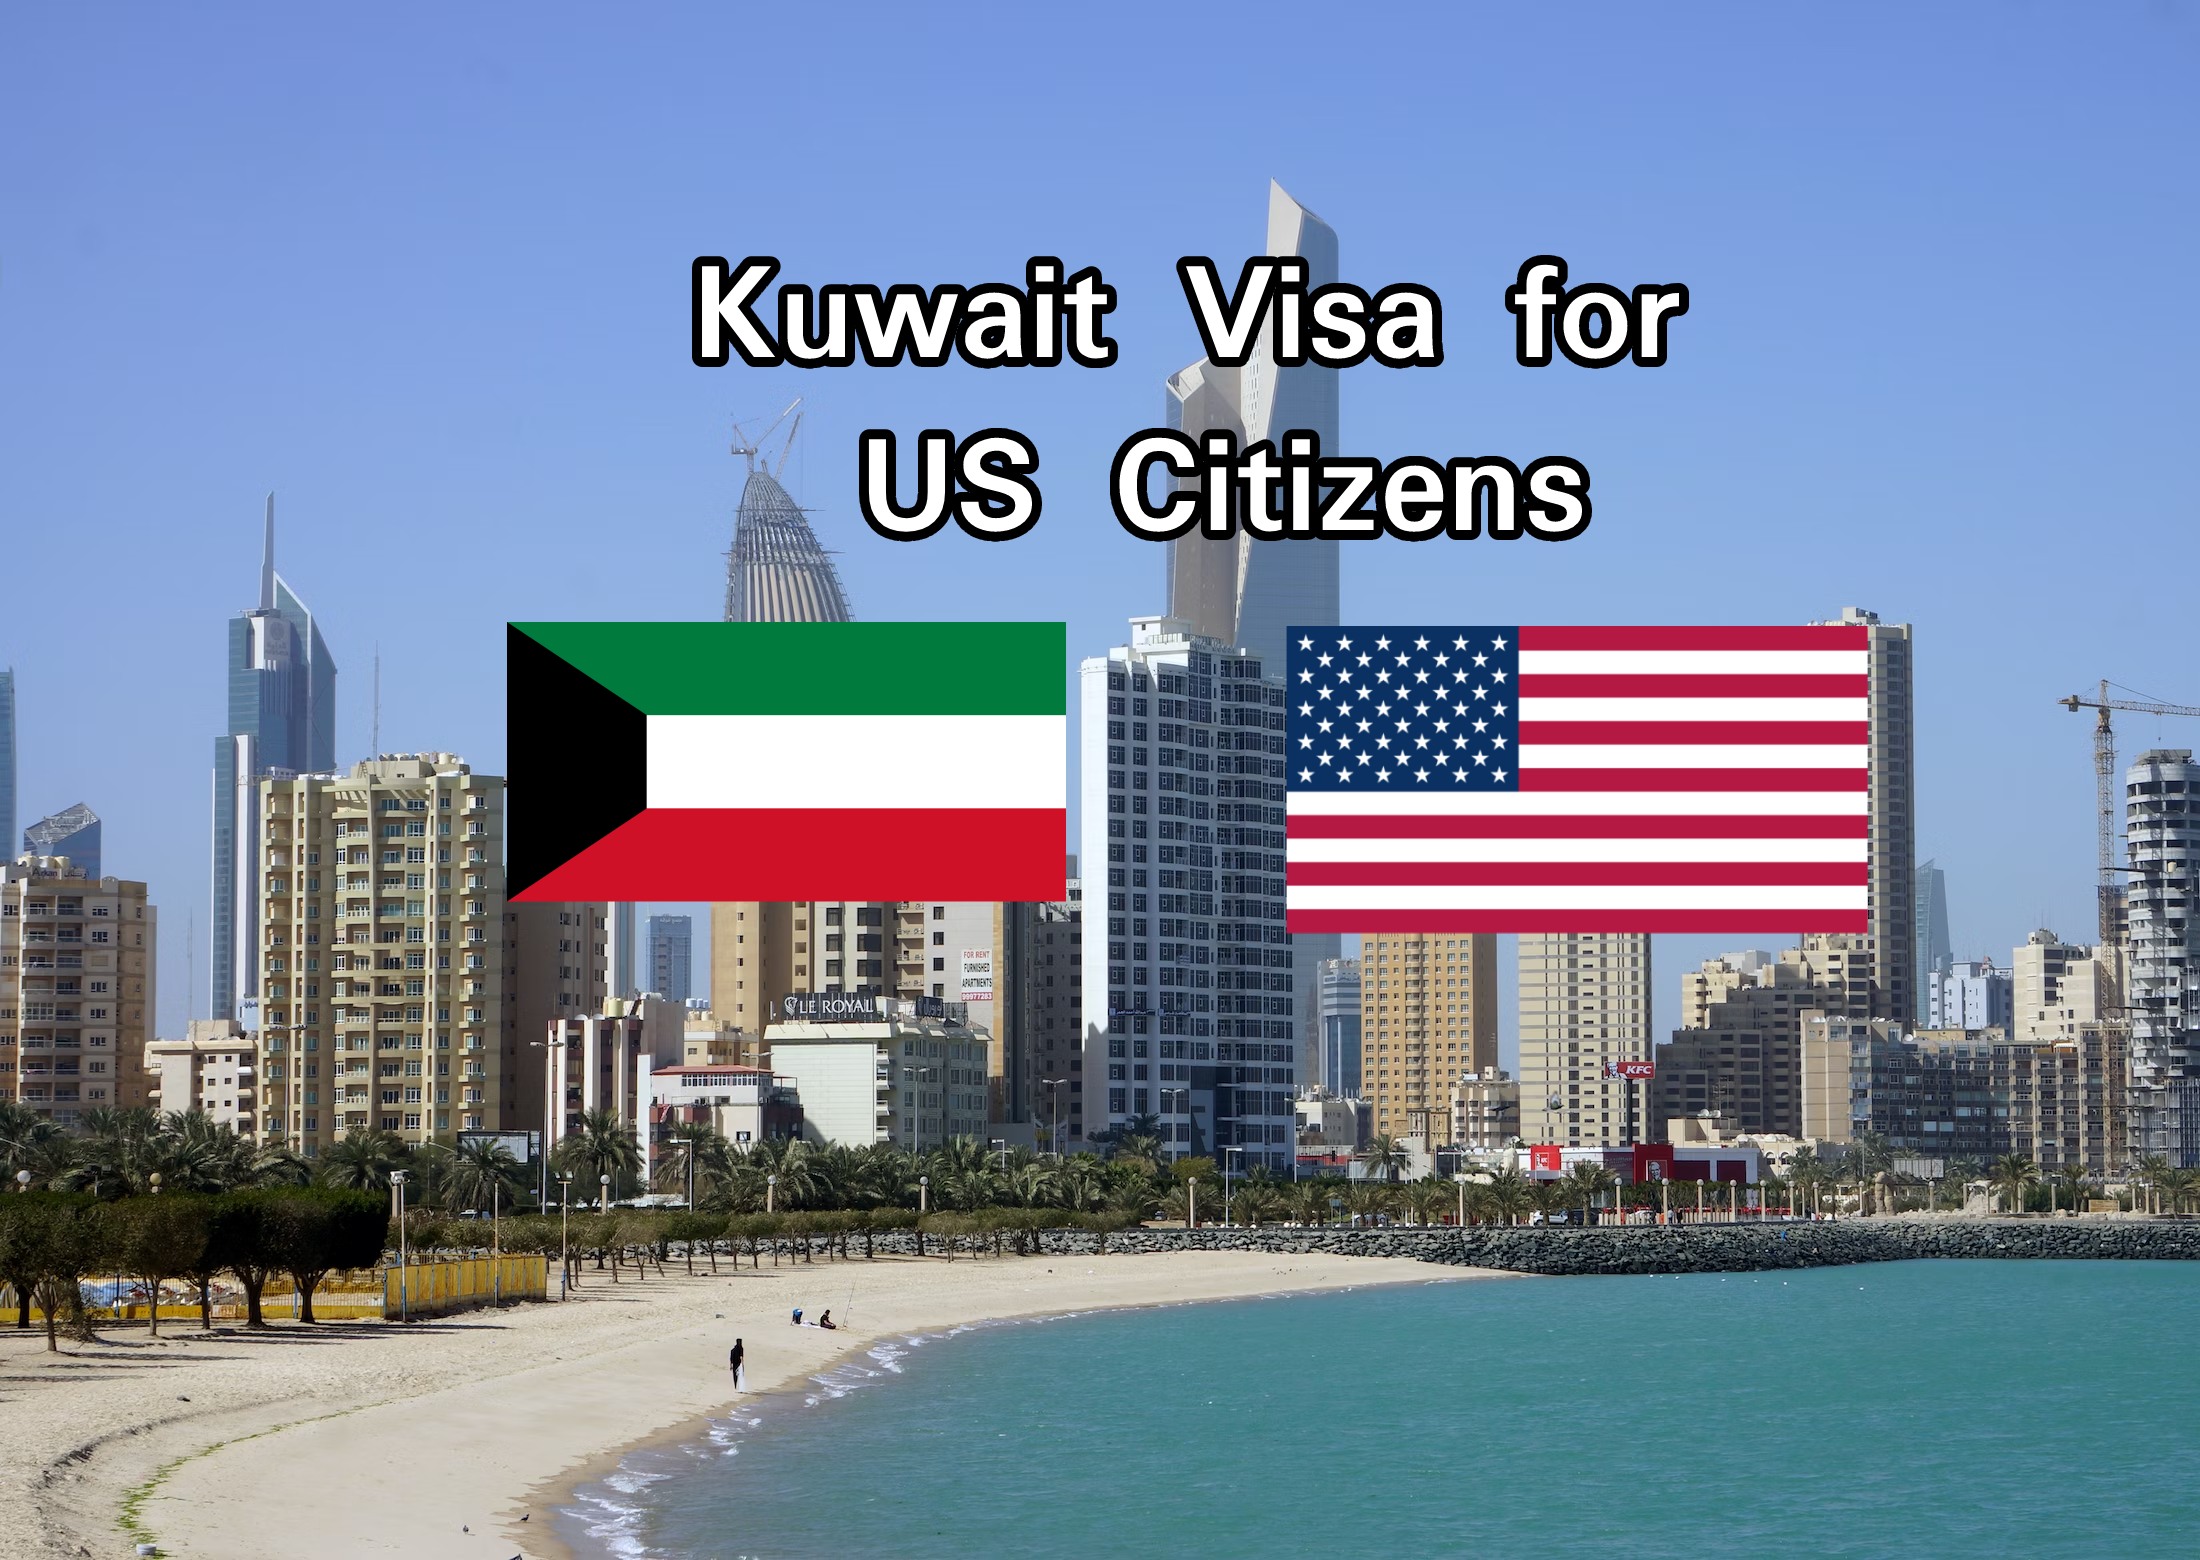 Kuwait Visa for US Citizens